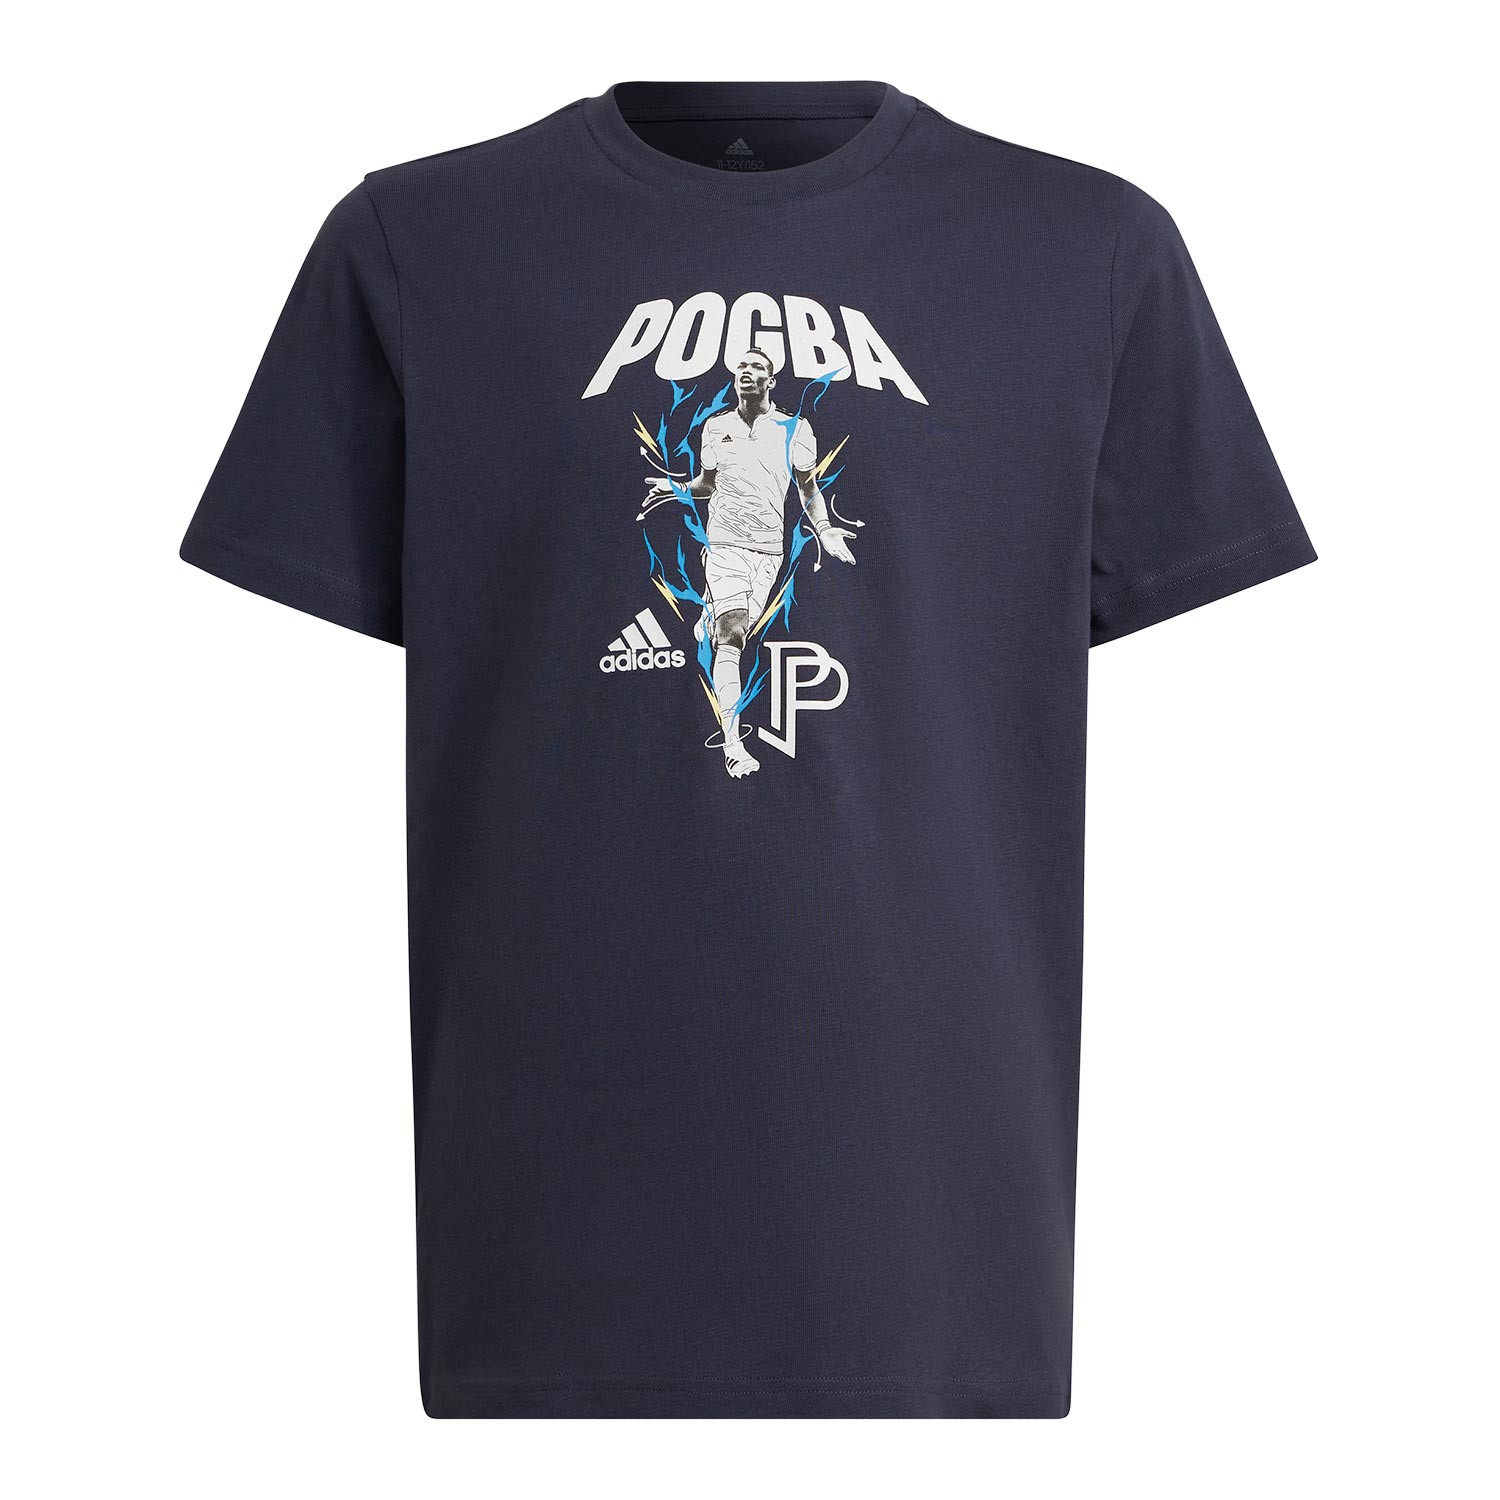 Camiseta adidas Pogba niño azul marino |